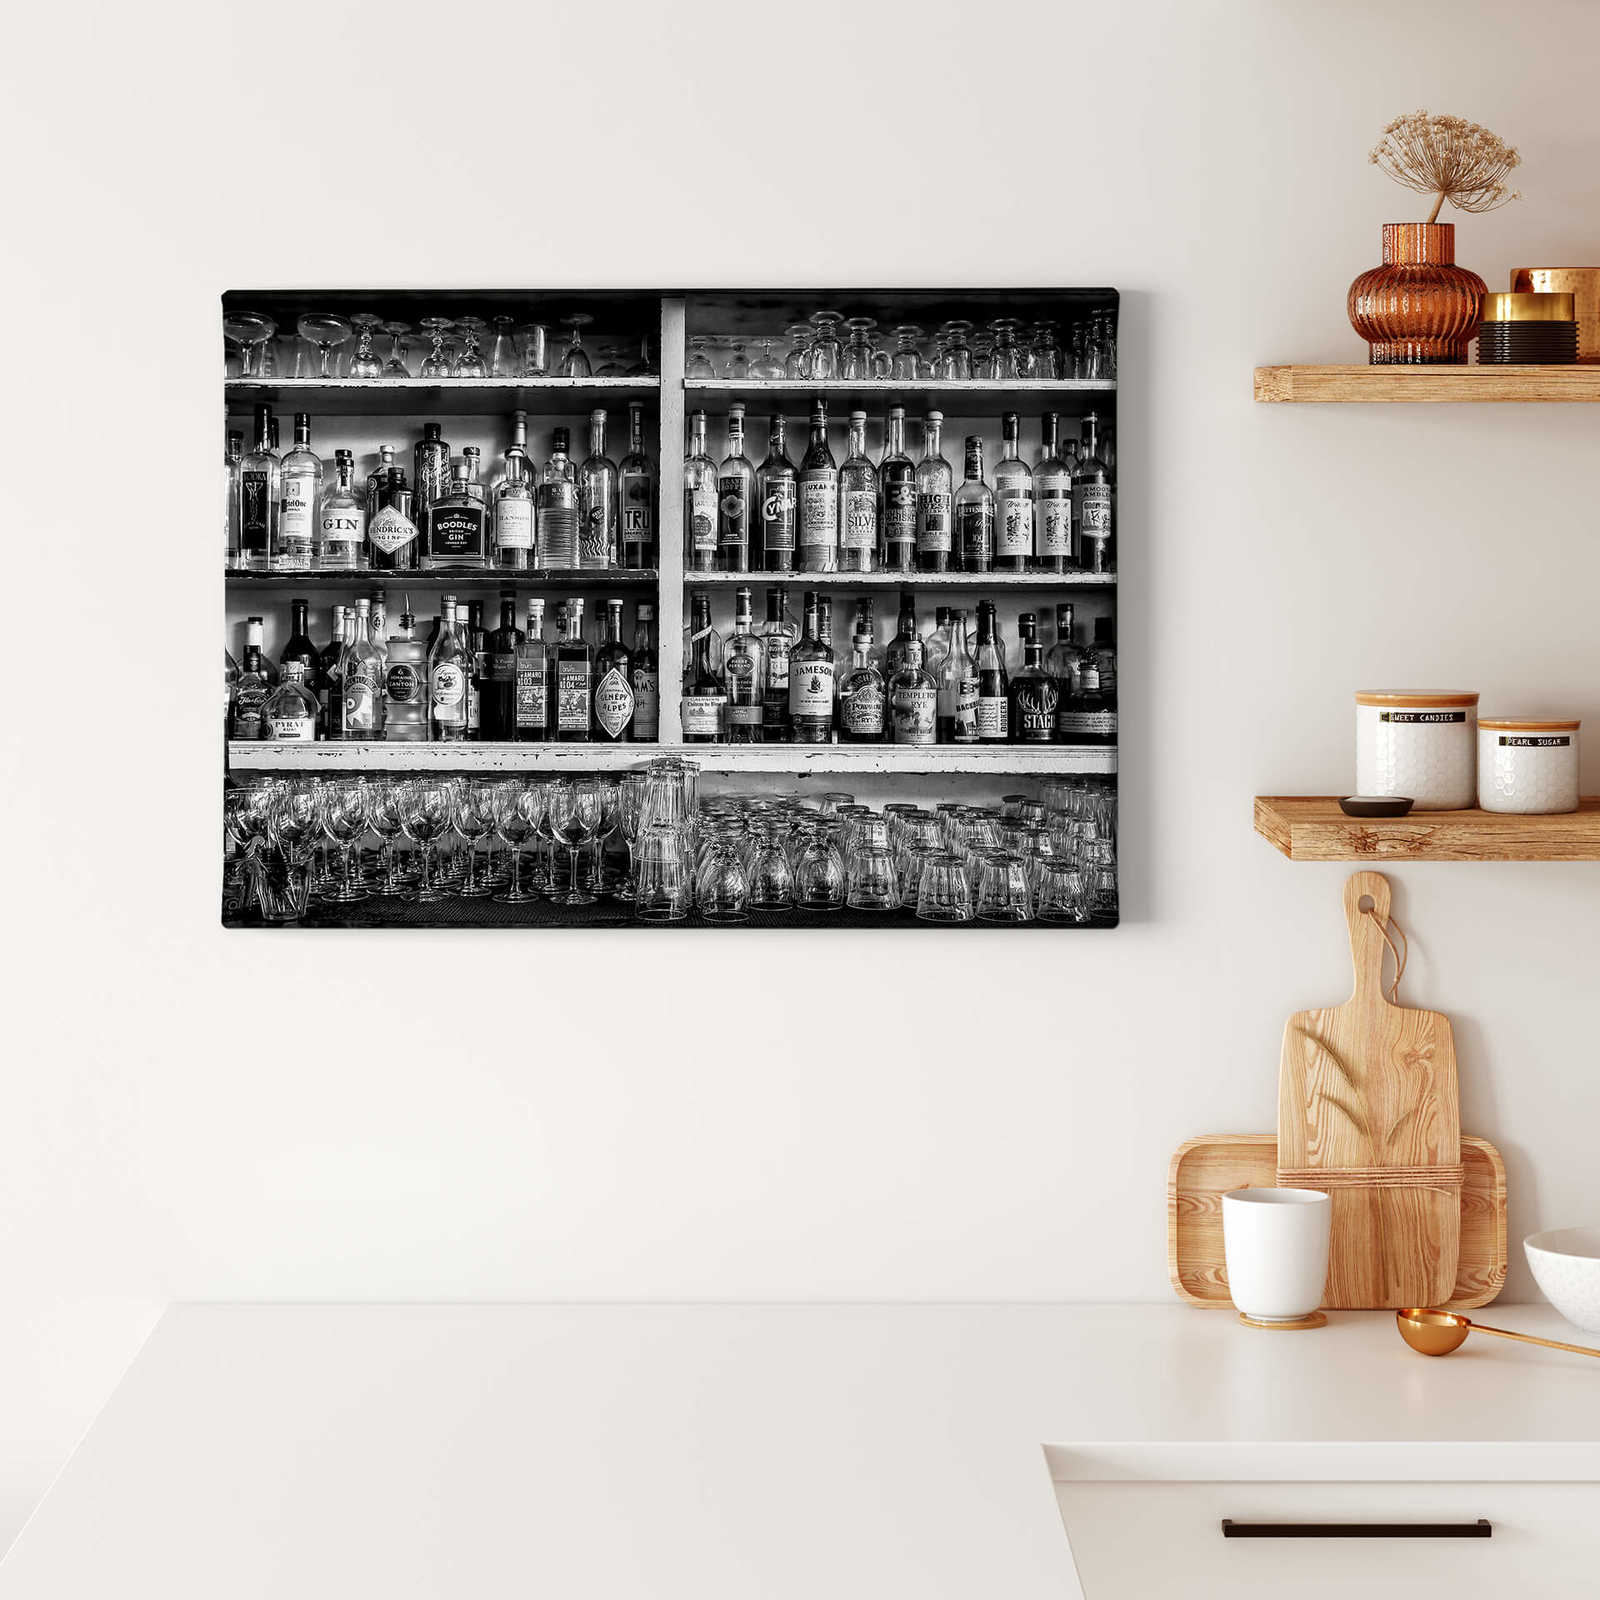             Zwart-wit canvas schilderij bar met flessen en glazen - 0,70 m x 0,50 m
        